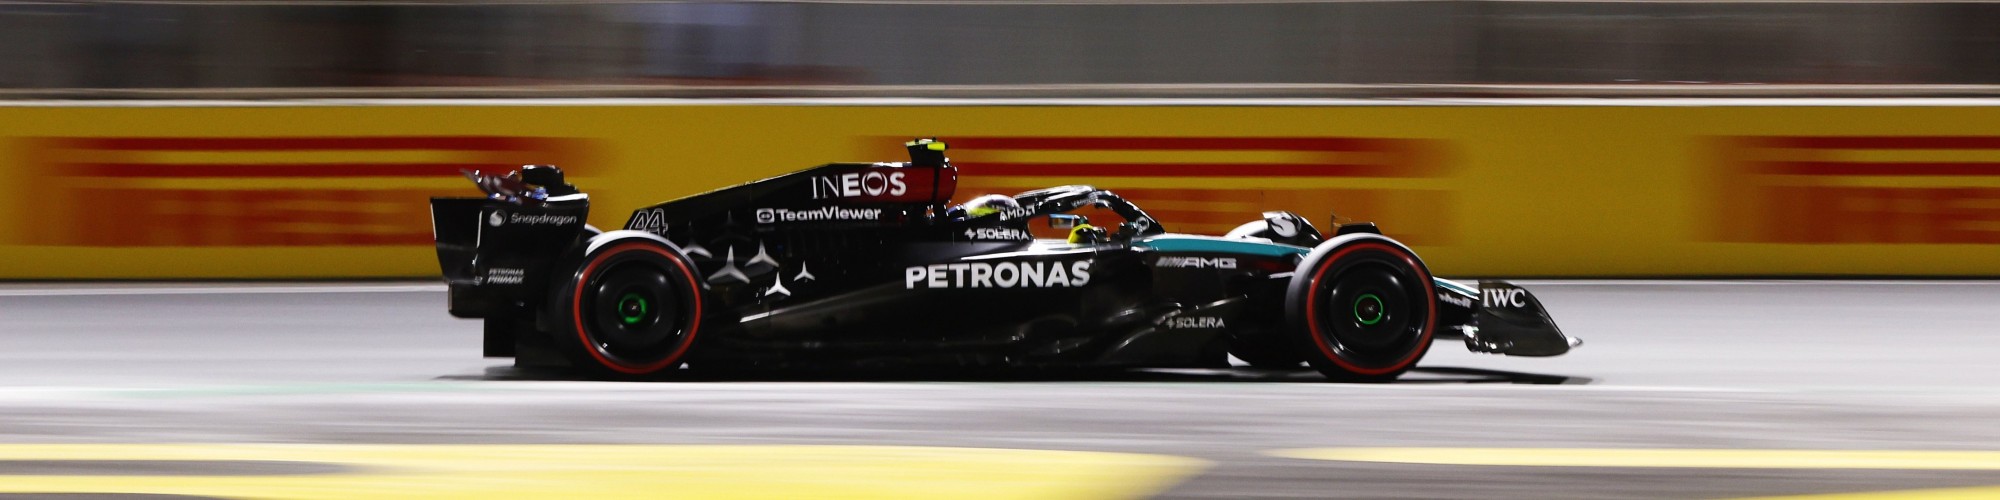 Mercedes-AMG Petronas F1 Team cover image